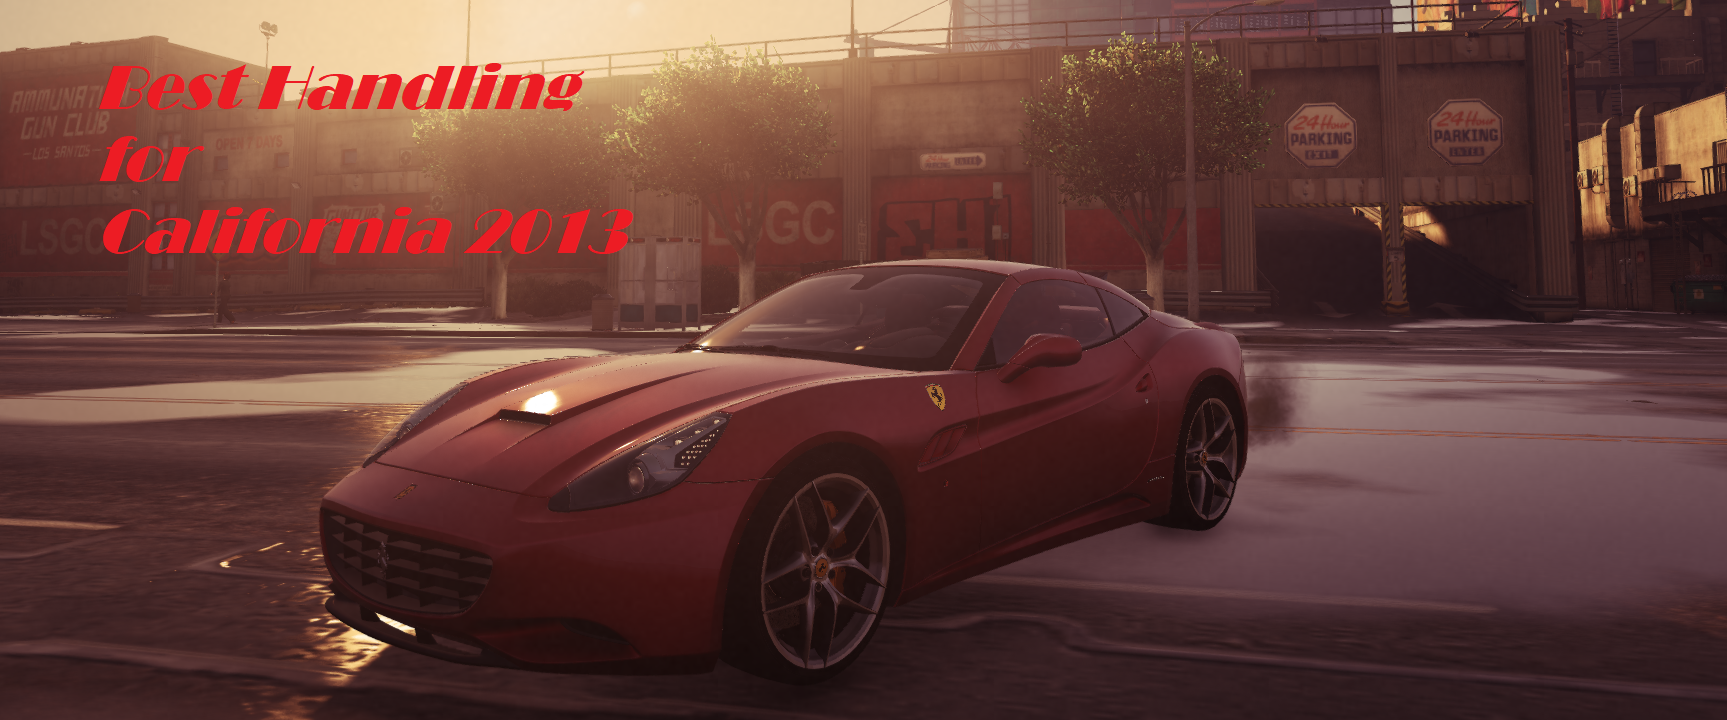 Ferrari California 13 Best Handling Gta5 Mods Com